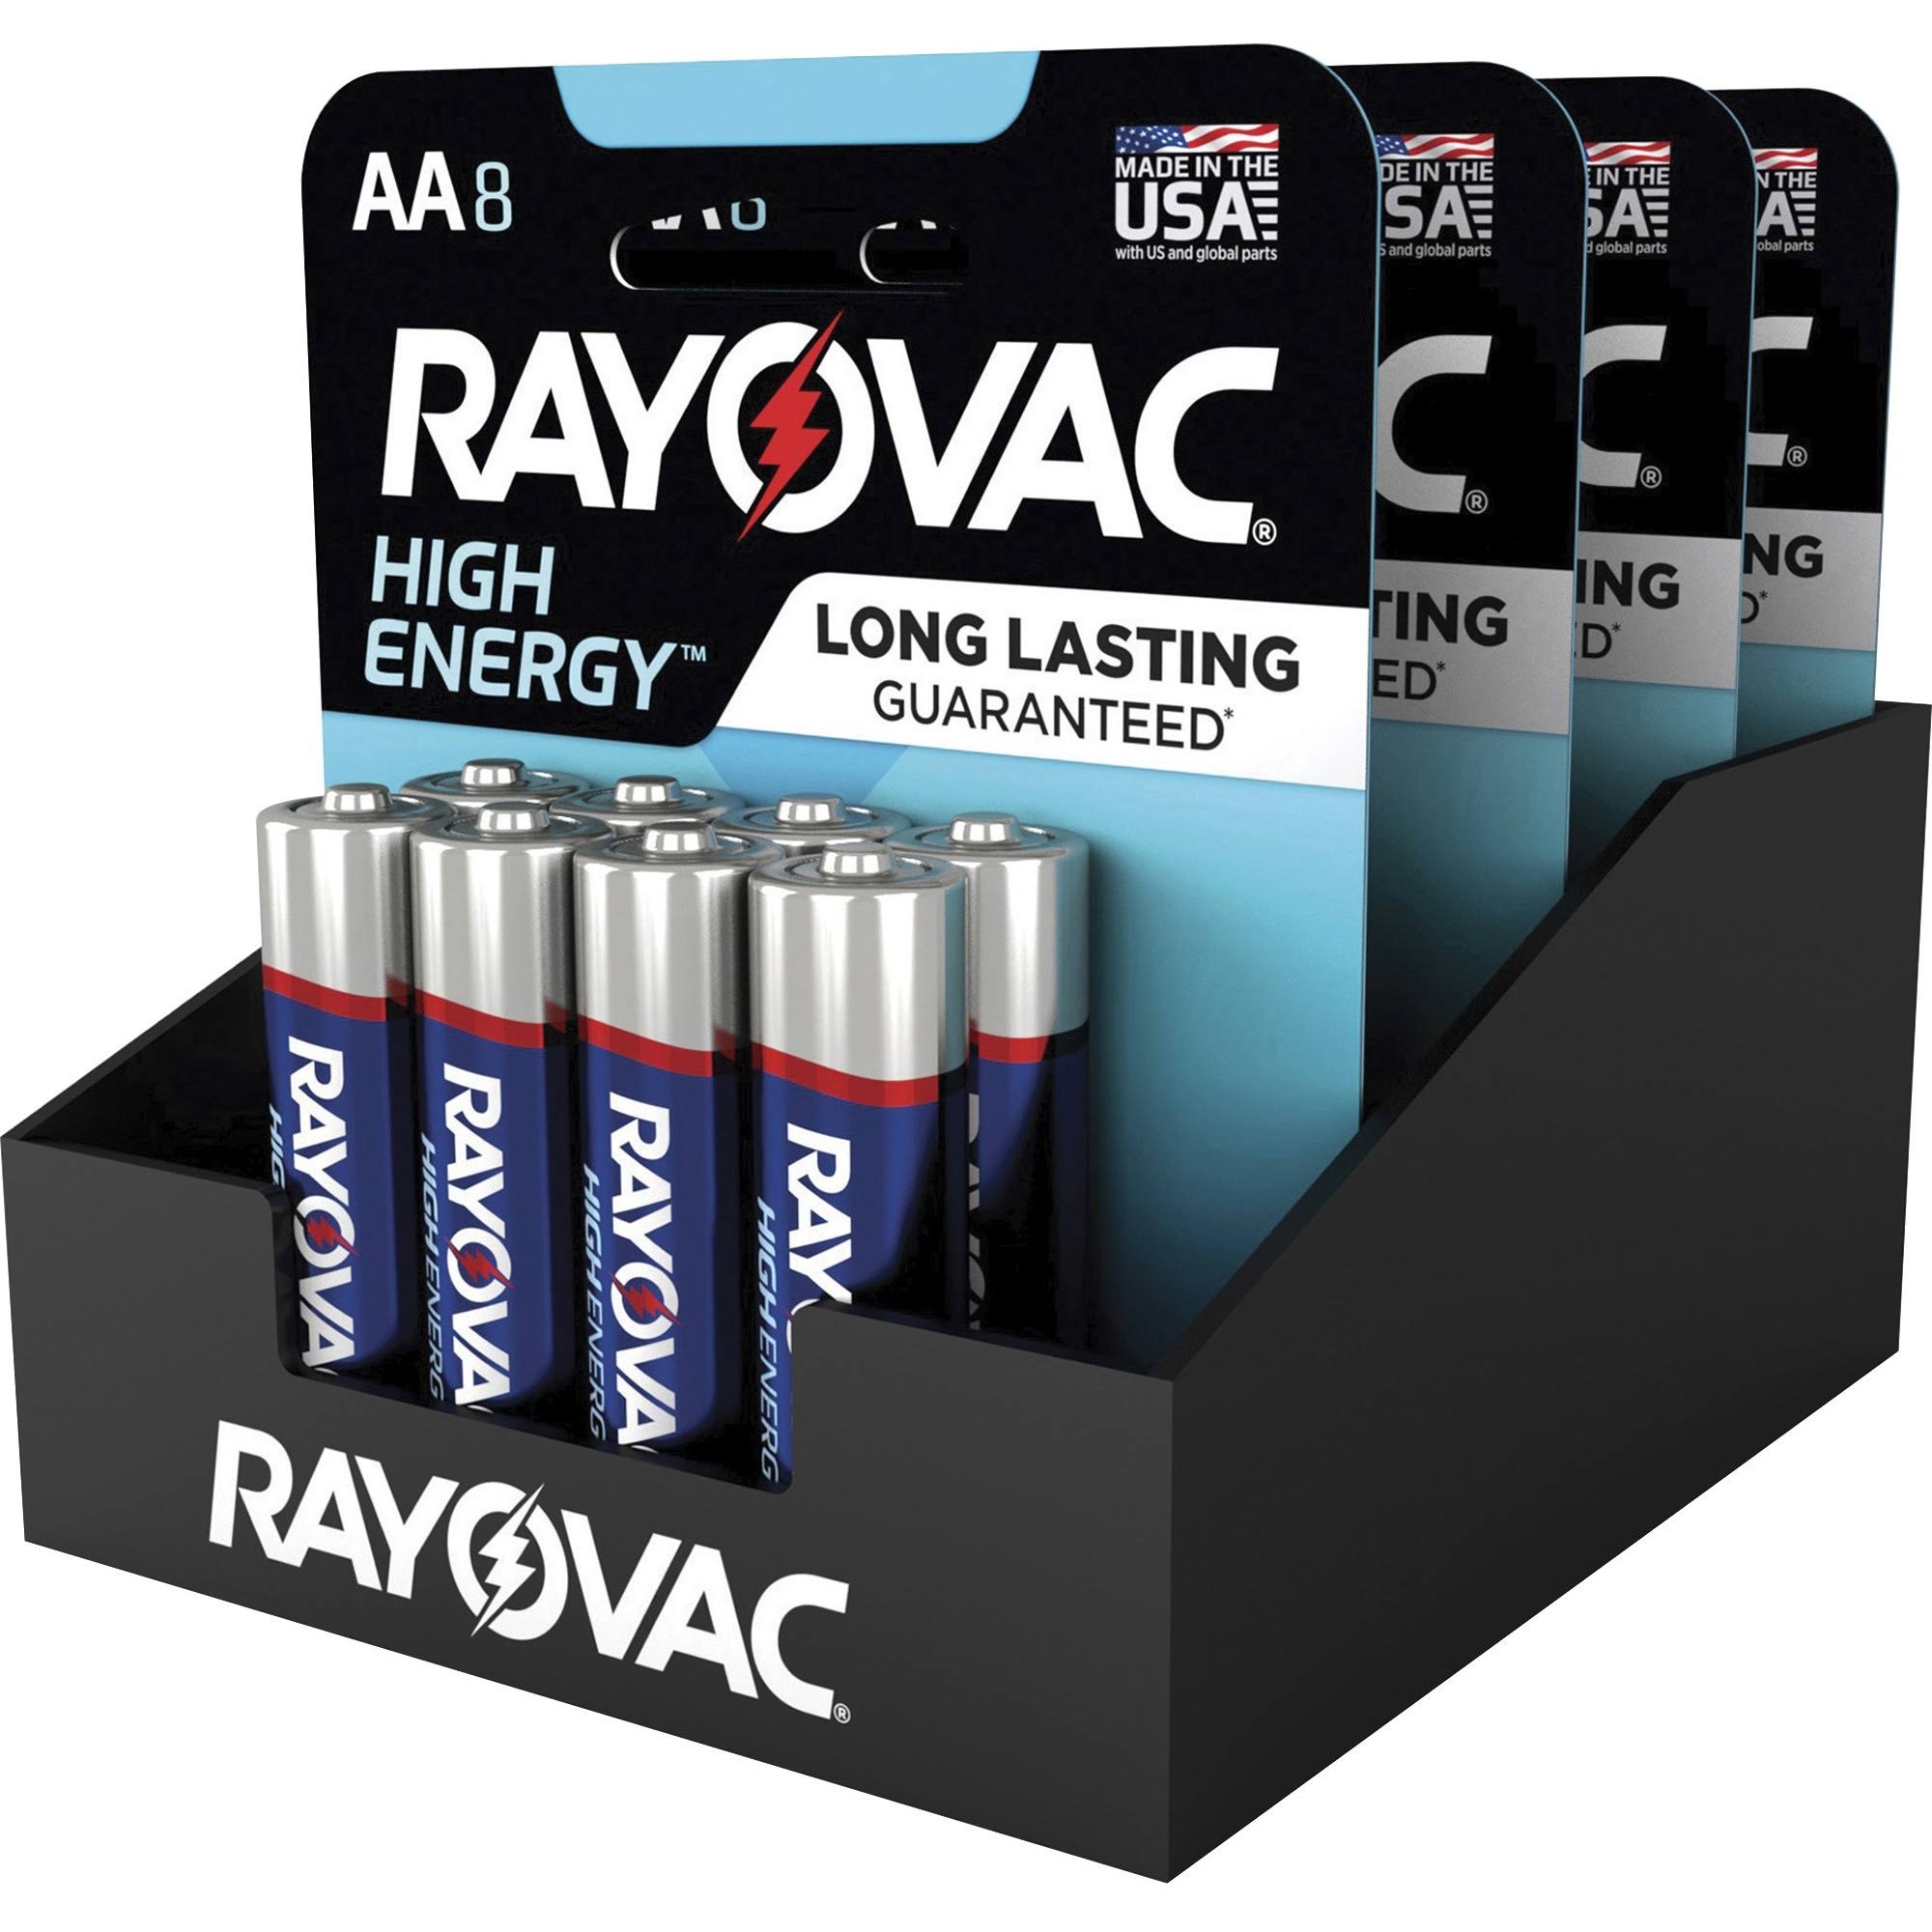 Rayovac AA Alkaline Batteries - 8pk, 1.5V